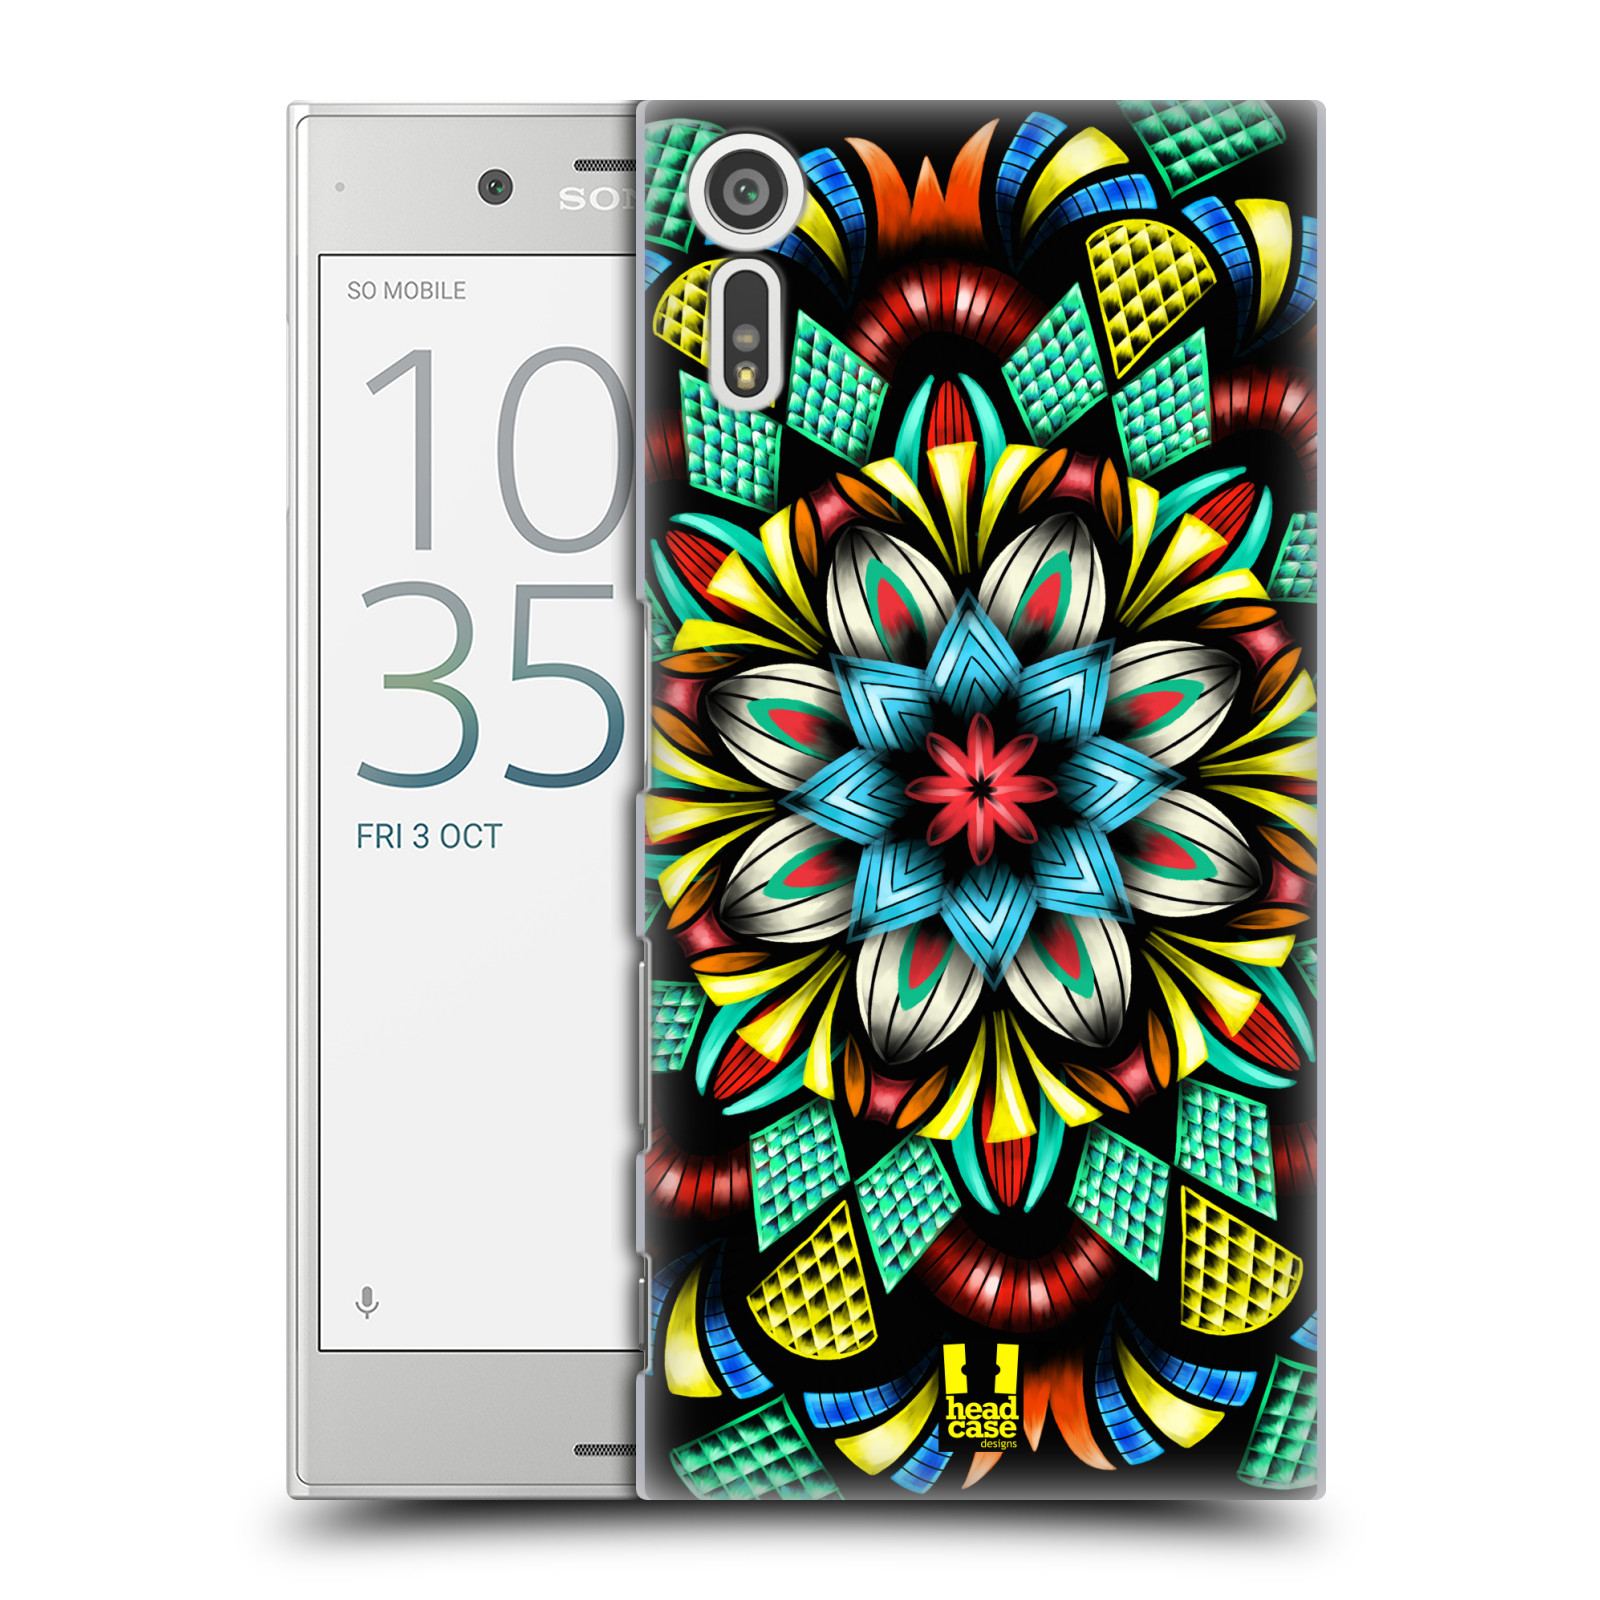 HEAD CASE plastový obal na mobil Sony Xperia XZ vzor Indie Mandala kaleidoskop barevný vzor TRADIČNÍ